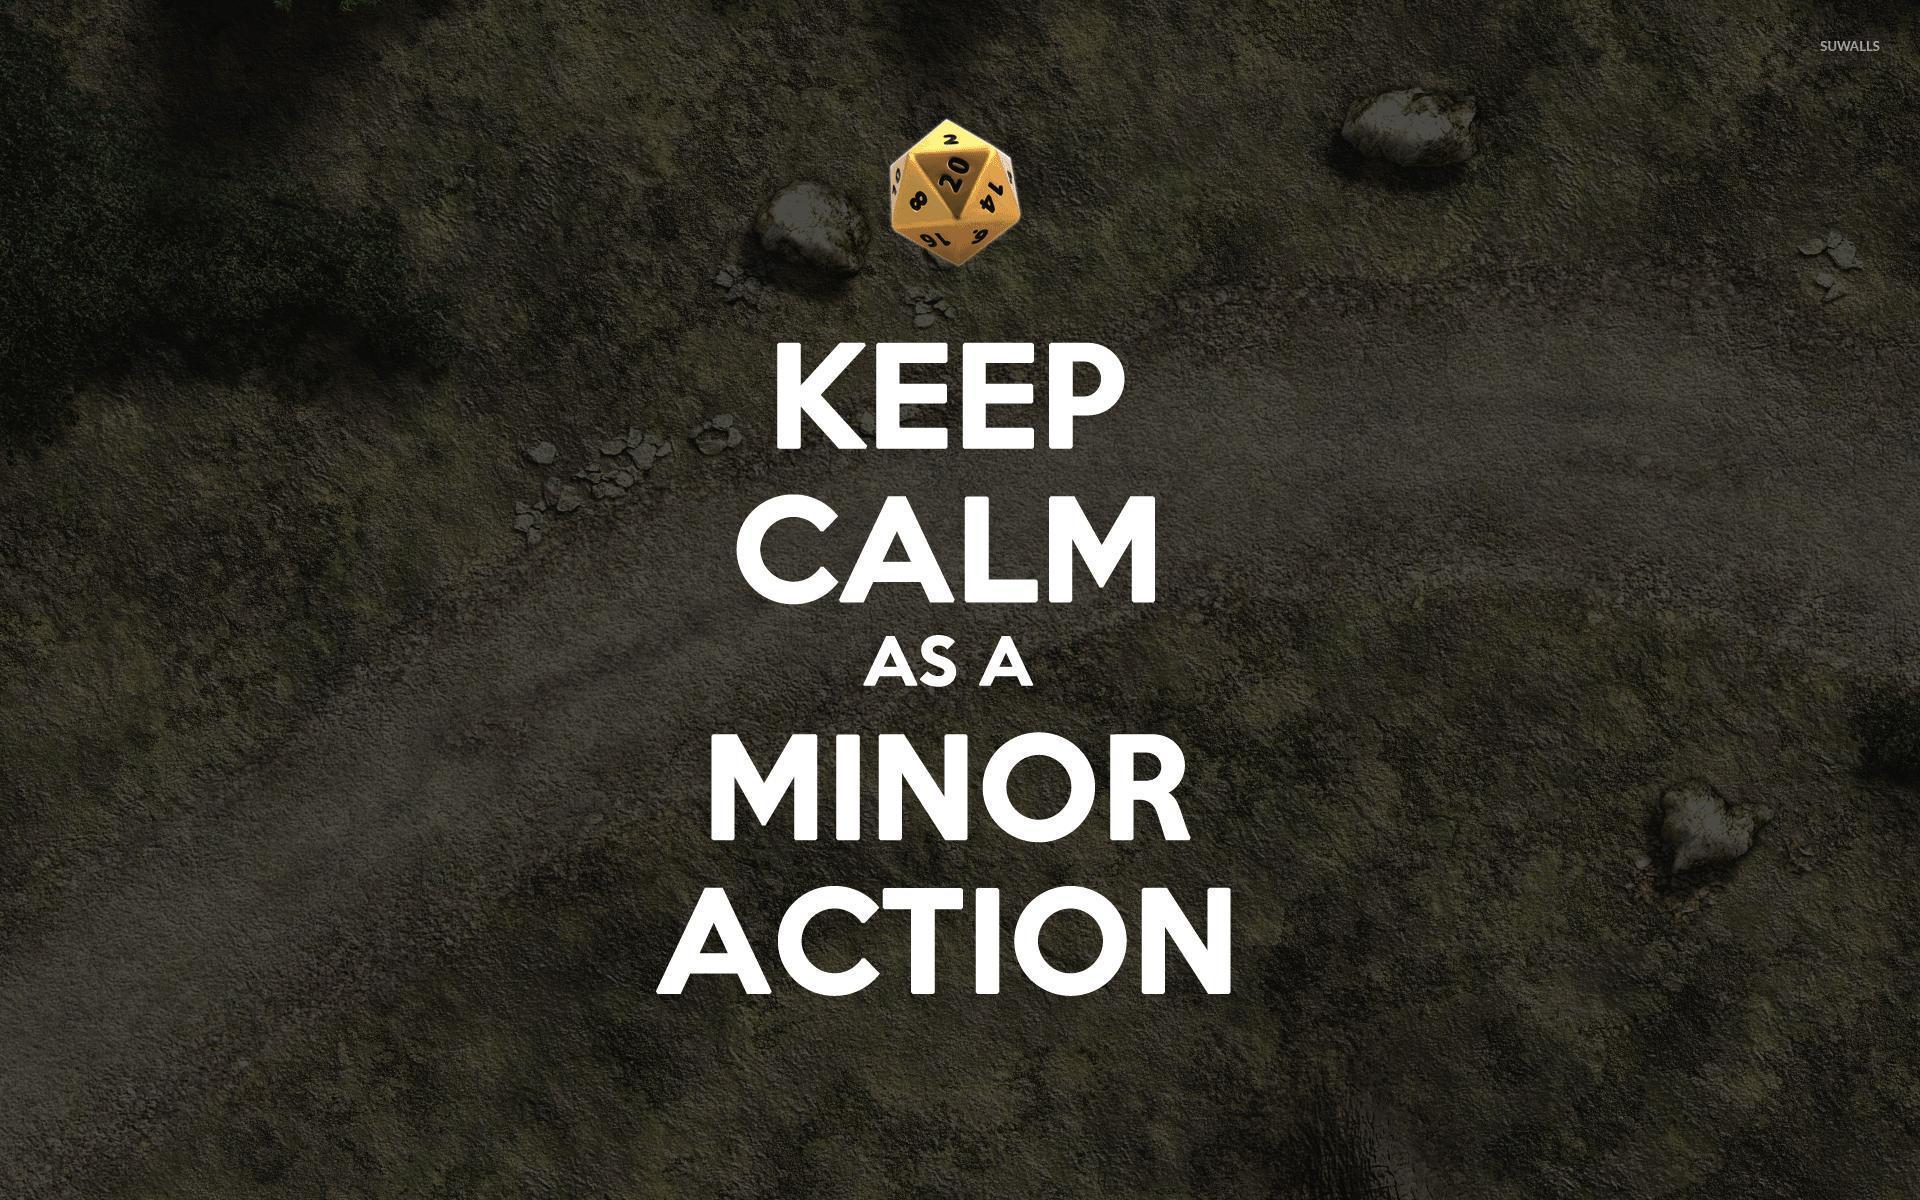 Keep calm as a minor action wallpaper wallpaper